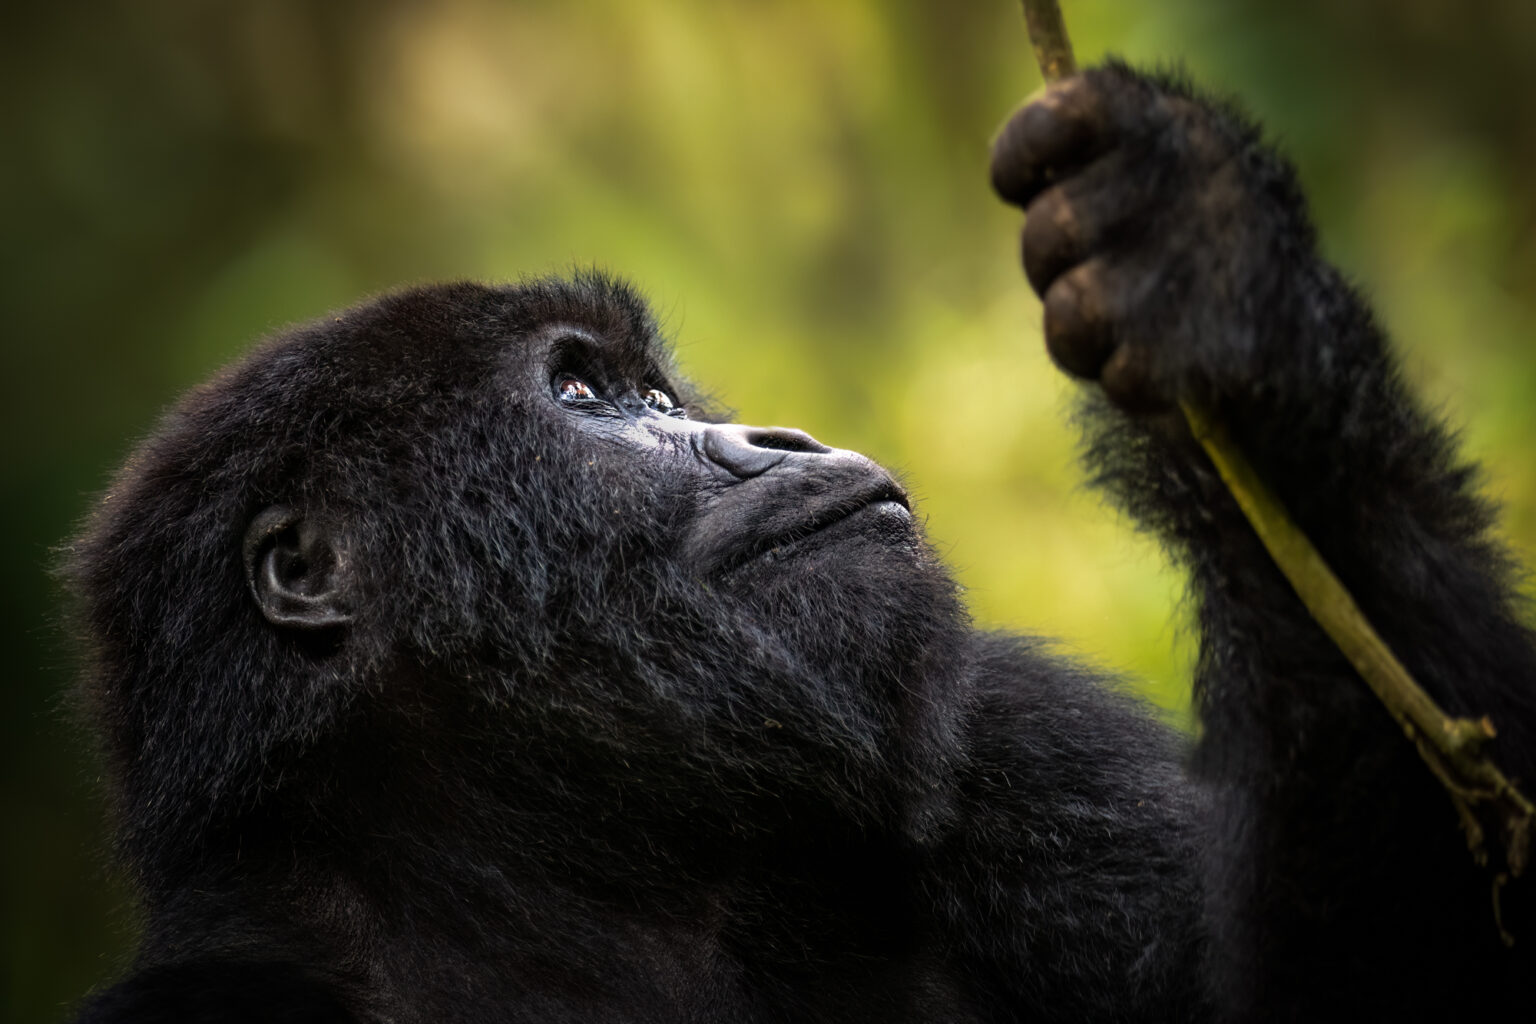 a close up of a gorilla holding a stick.